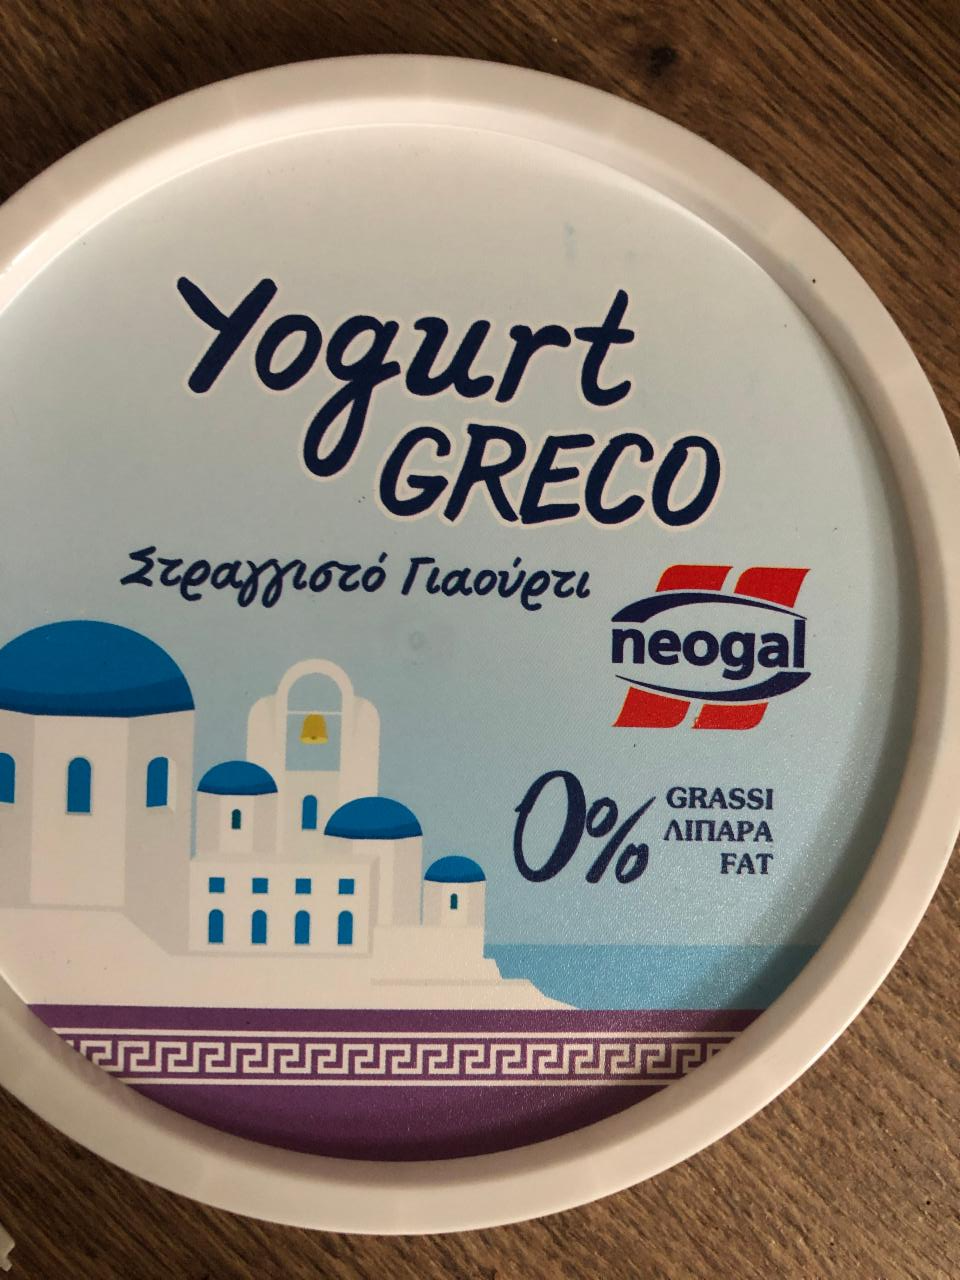 Fotografie - Yogurt greco 0% fat Neogal